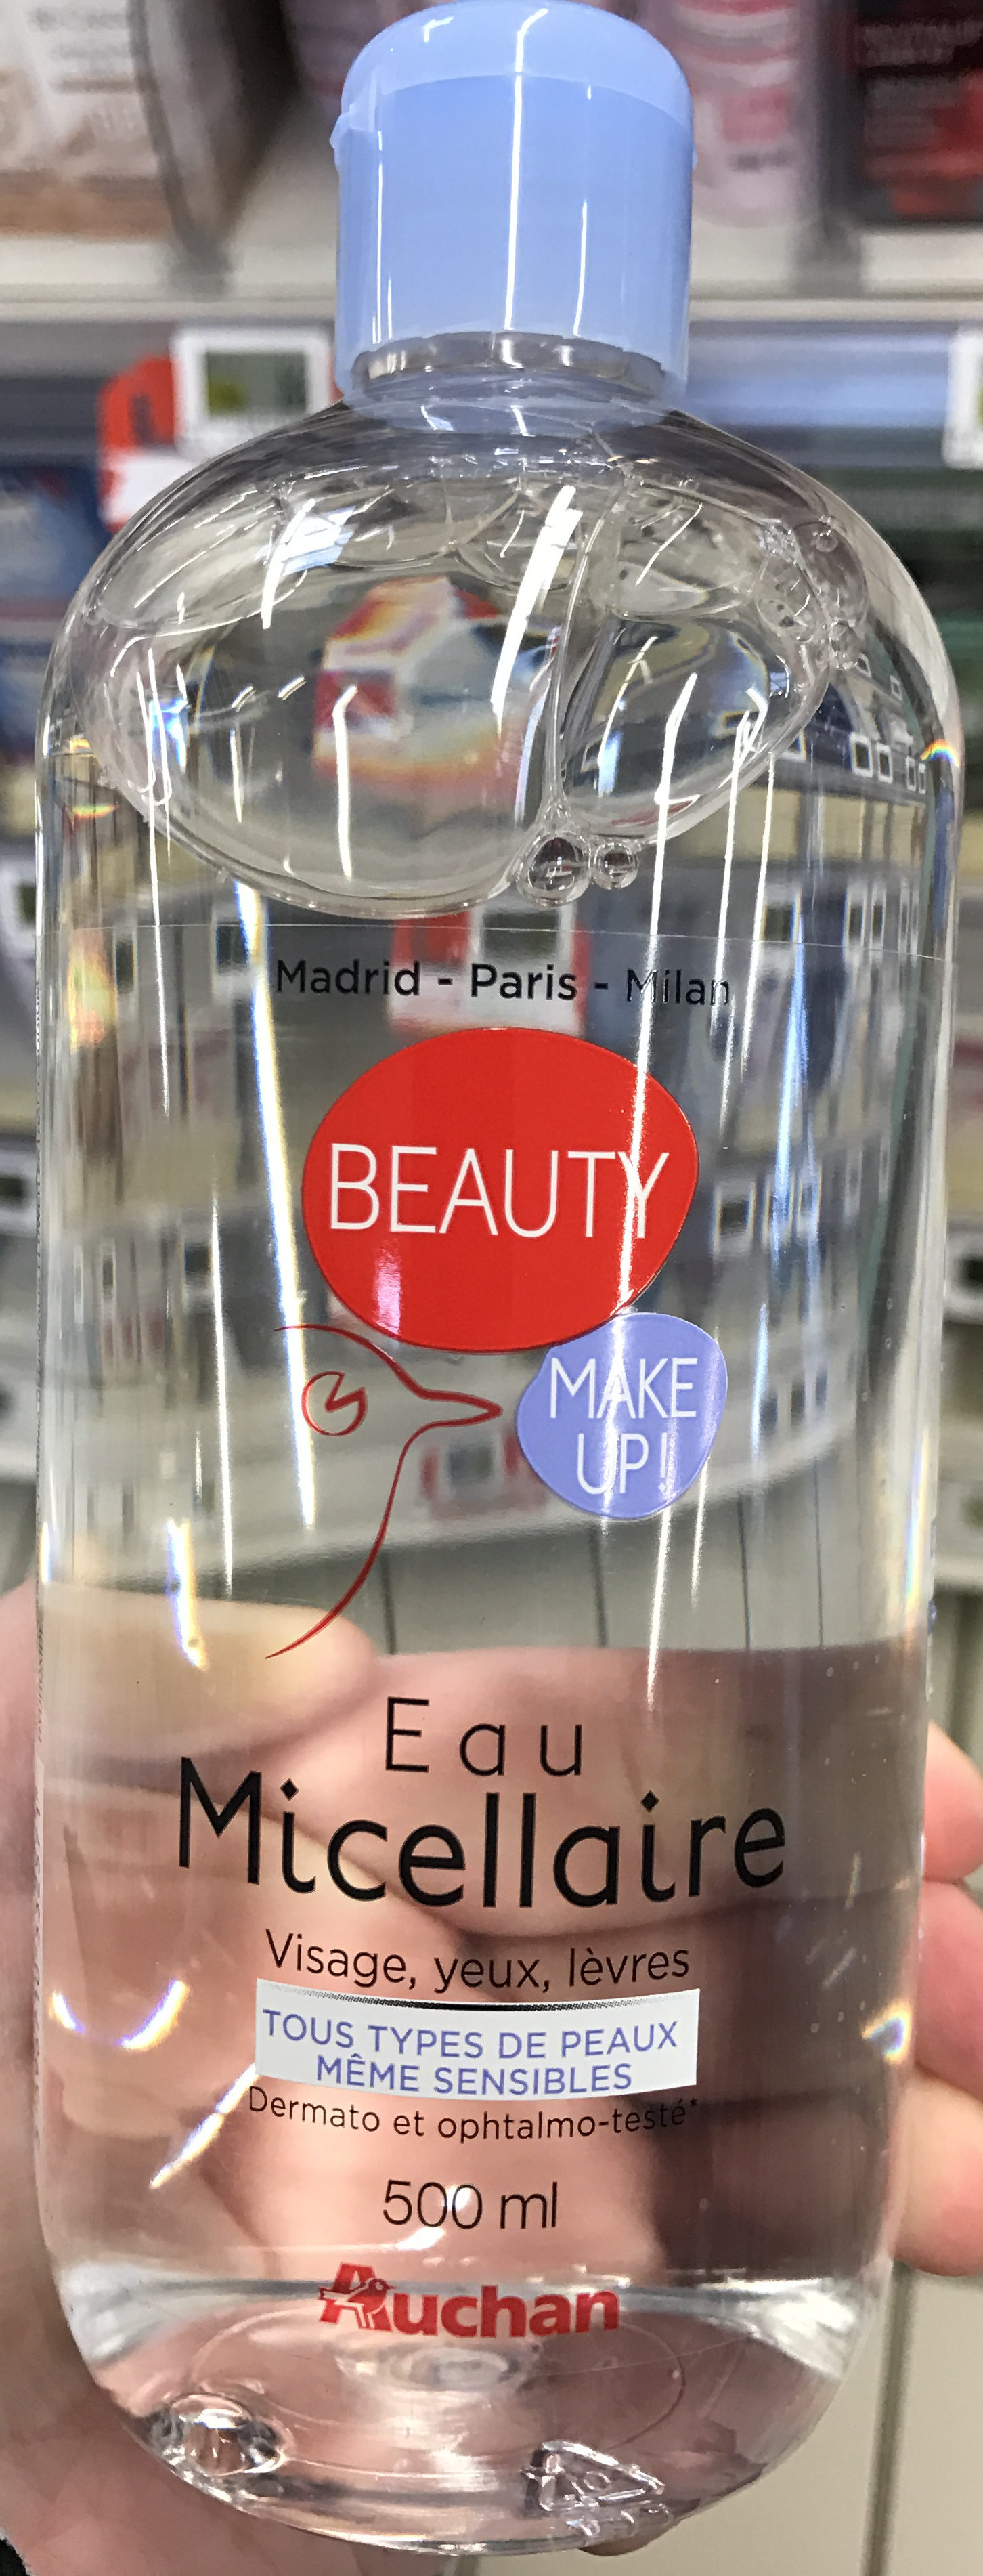 Beauty Eau micellaire - Product - fr